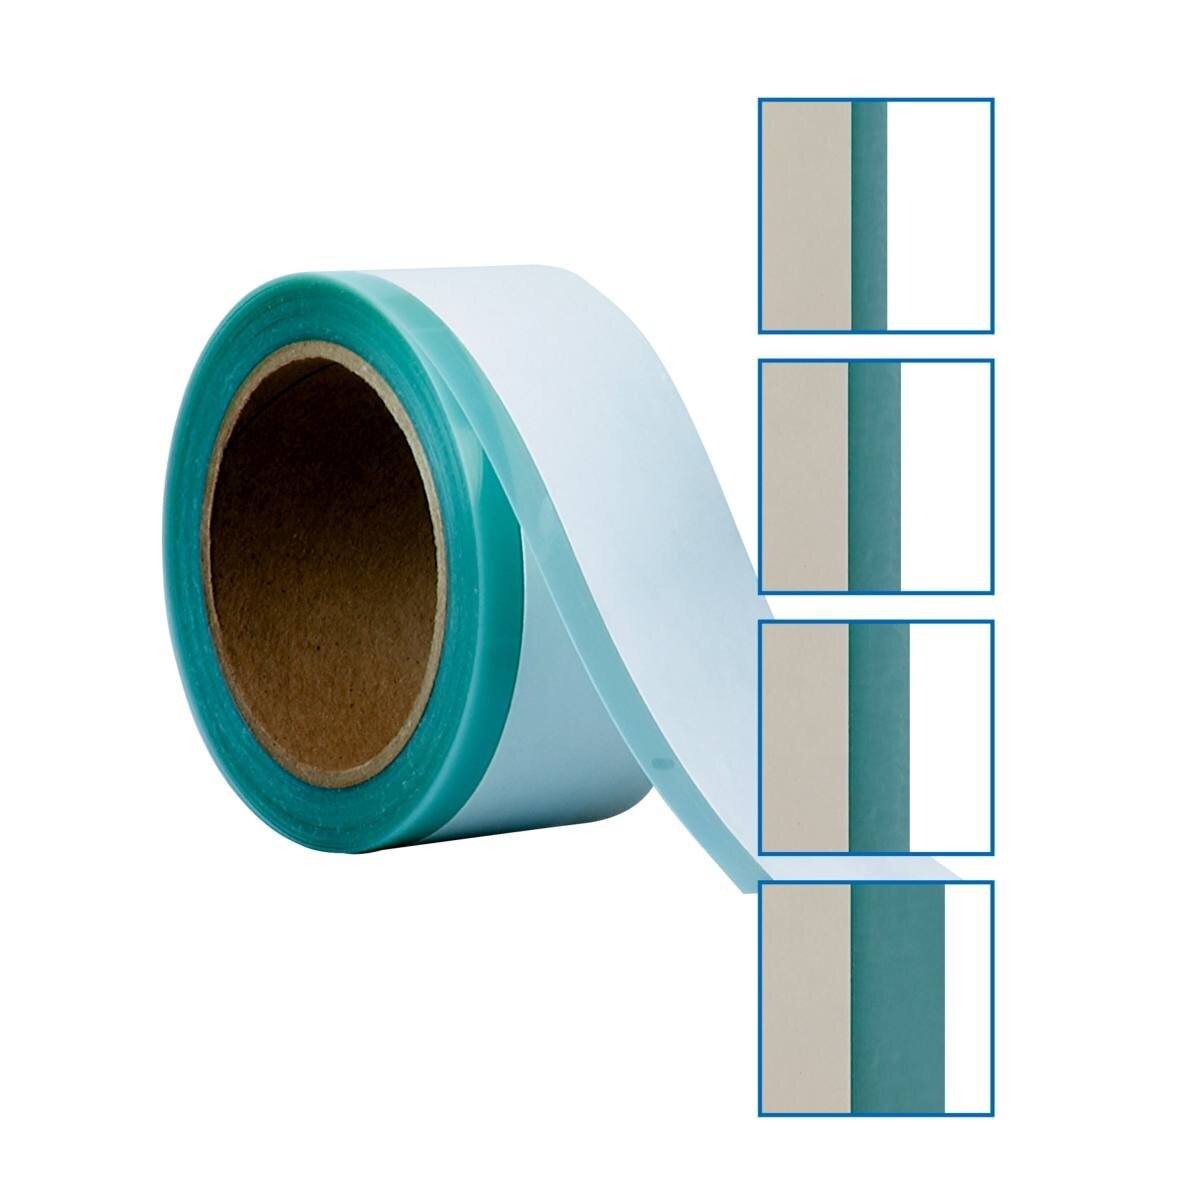 3M Lift 'n Stick masking tape, silver, 50 mm x 10 m, insertion depth: 15 mm #06348